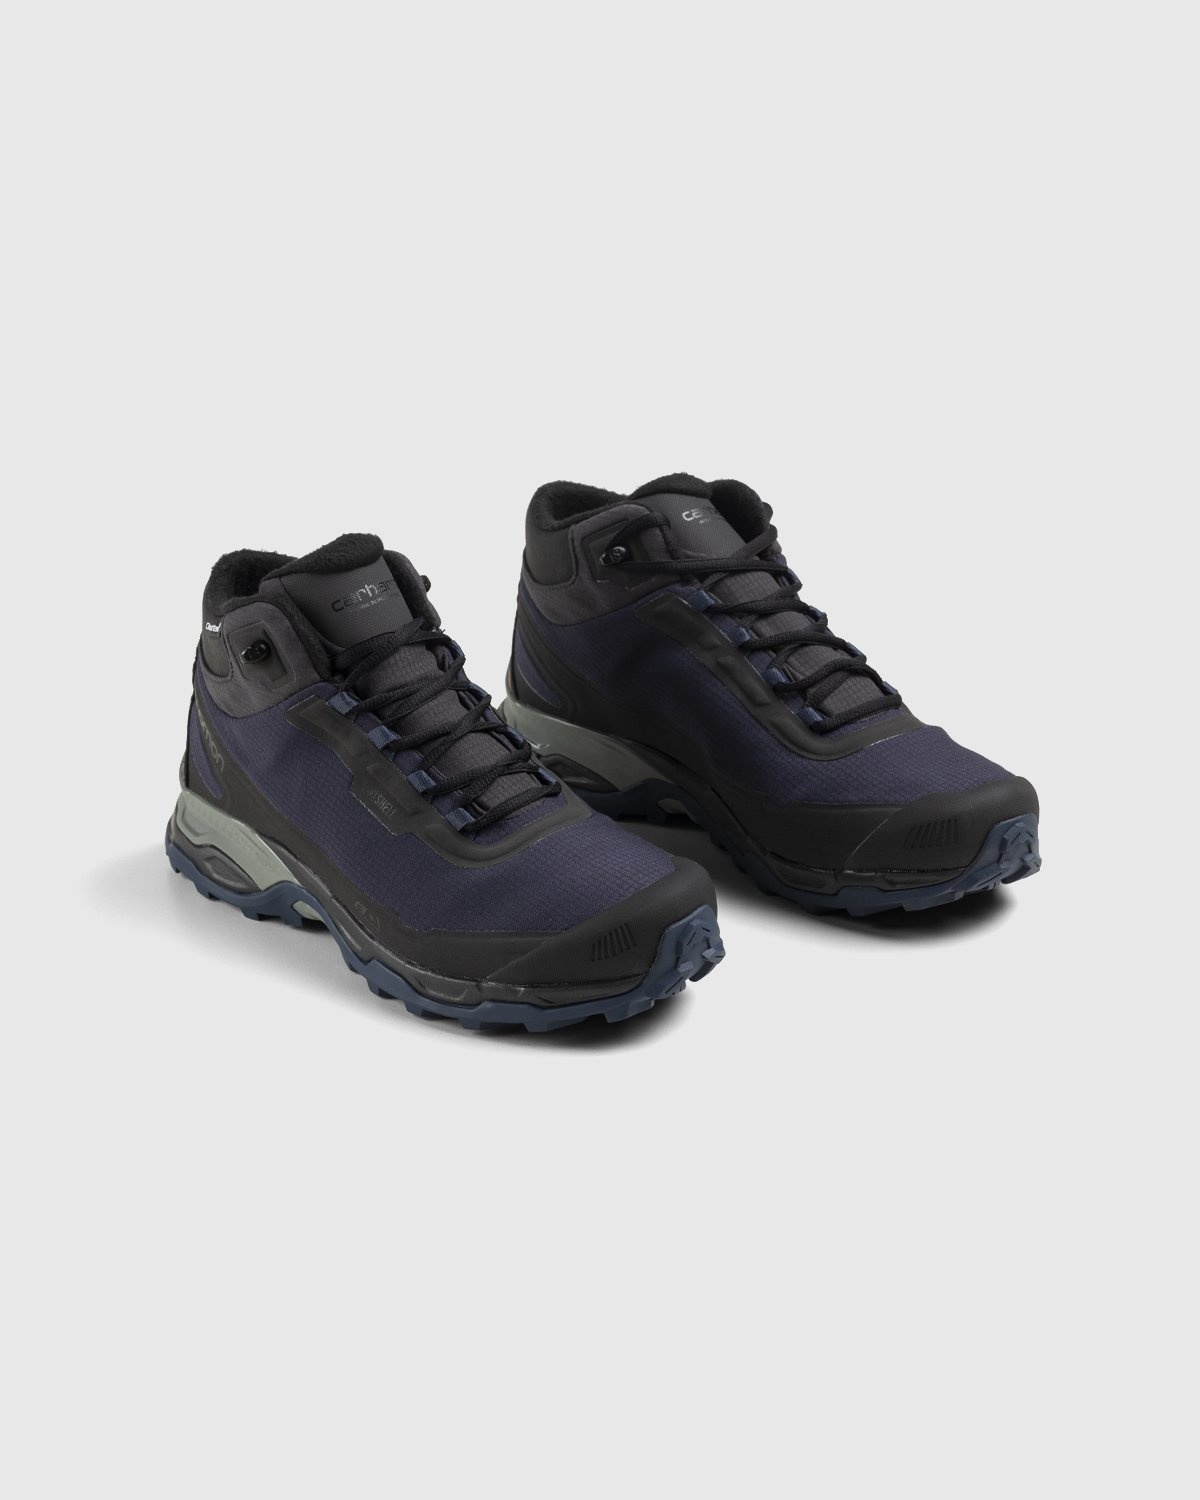 Carhartt WIP x Salomon – Shelter CSWP Black - Hiking Boots - Black - Image 3